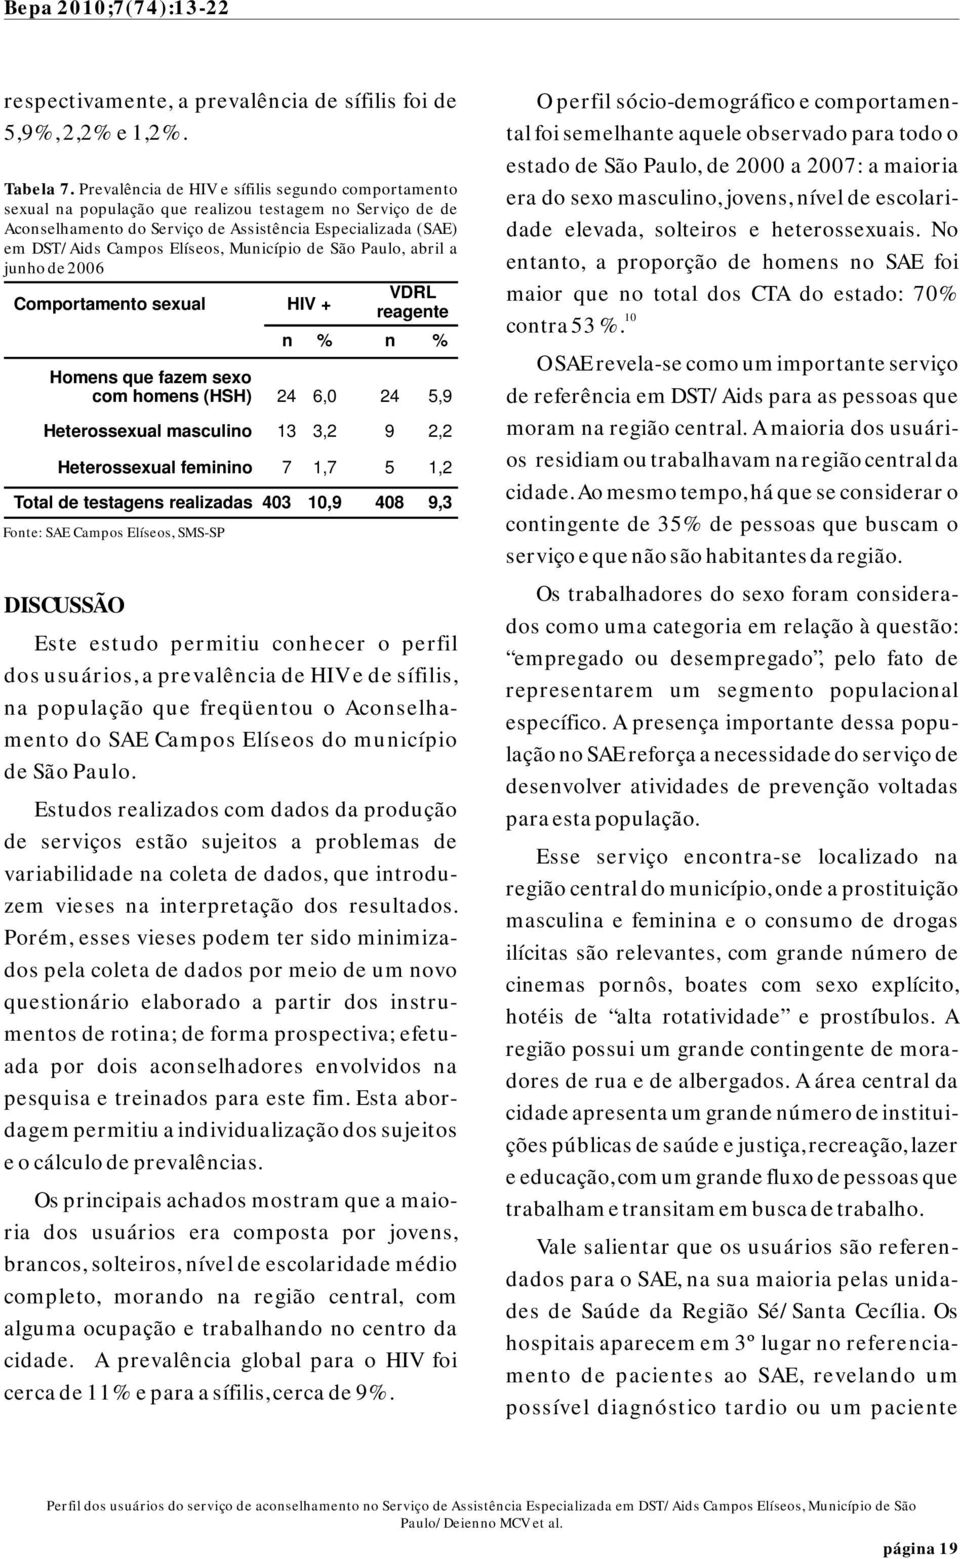 Município de São Paulo, abril a junho de 2006 VDRL Comportamento sexual HIV + reagente n % n % Homens que fazem sexo com homens (HSH) 24 6,0 24 5,9 Heterossexual masculino 13 3,2 9 2,2 Heterossexual